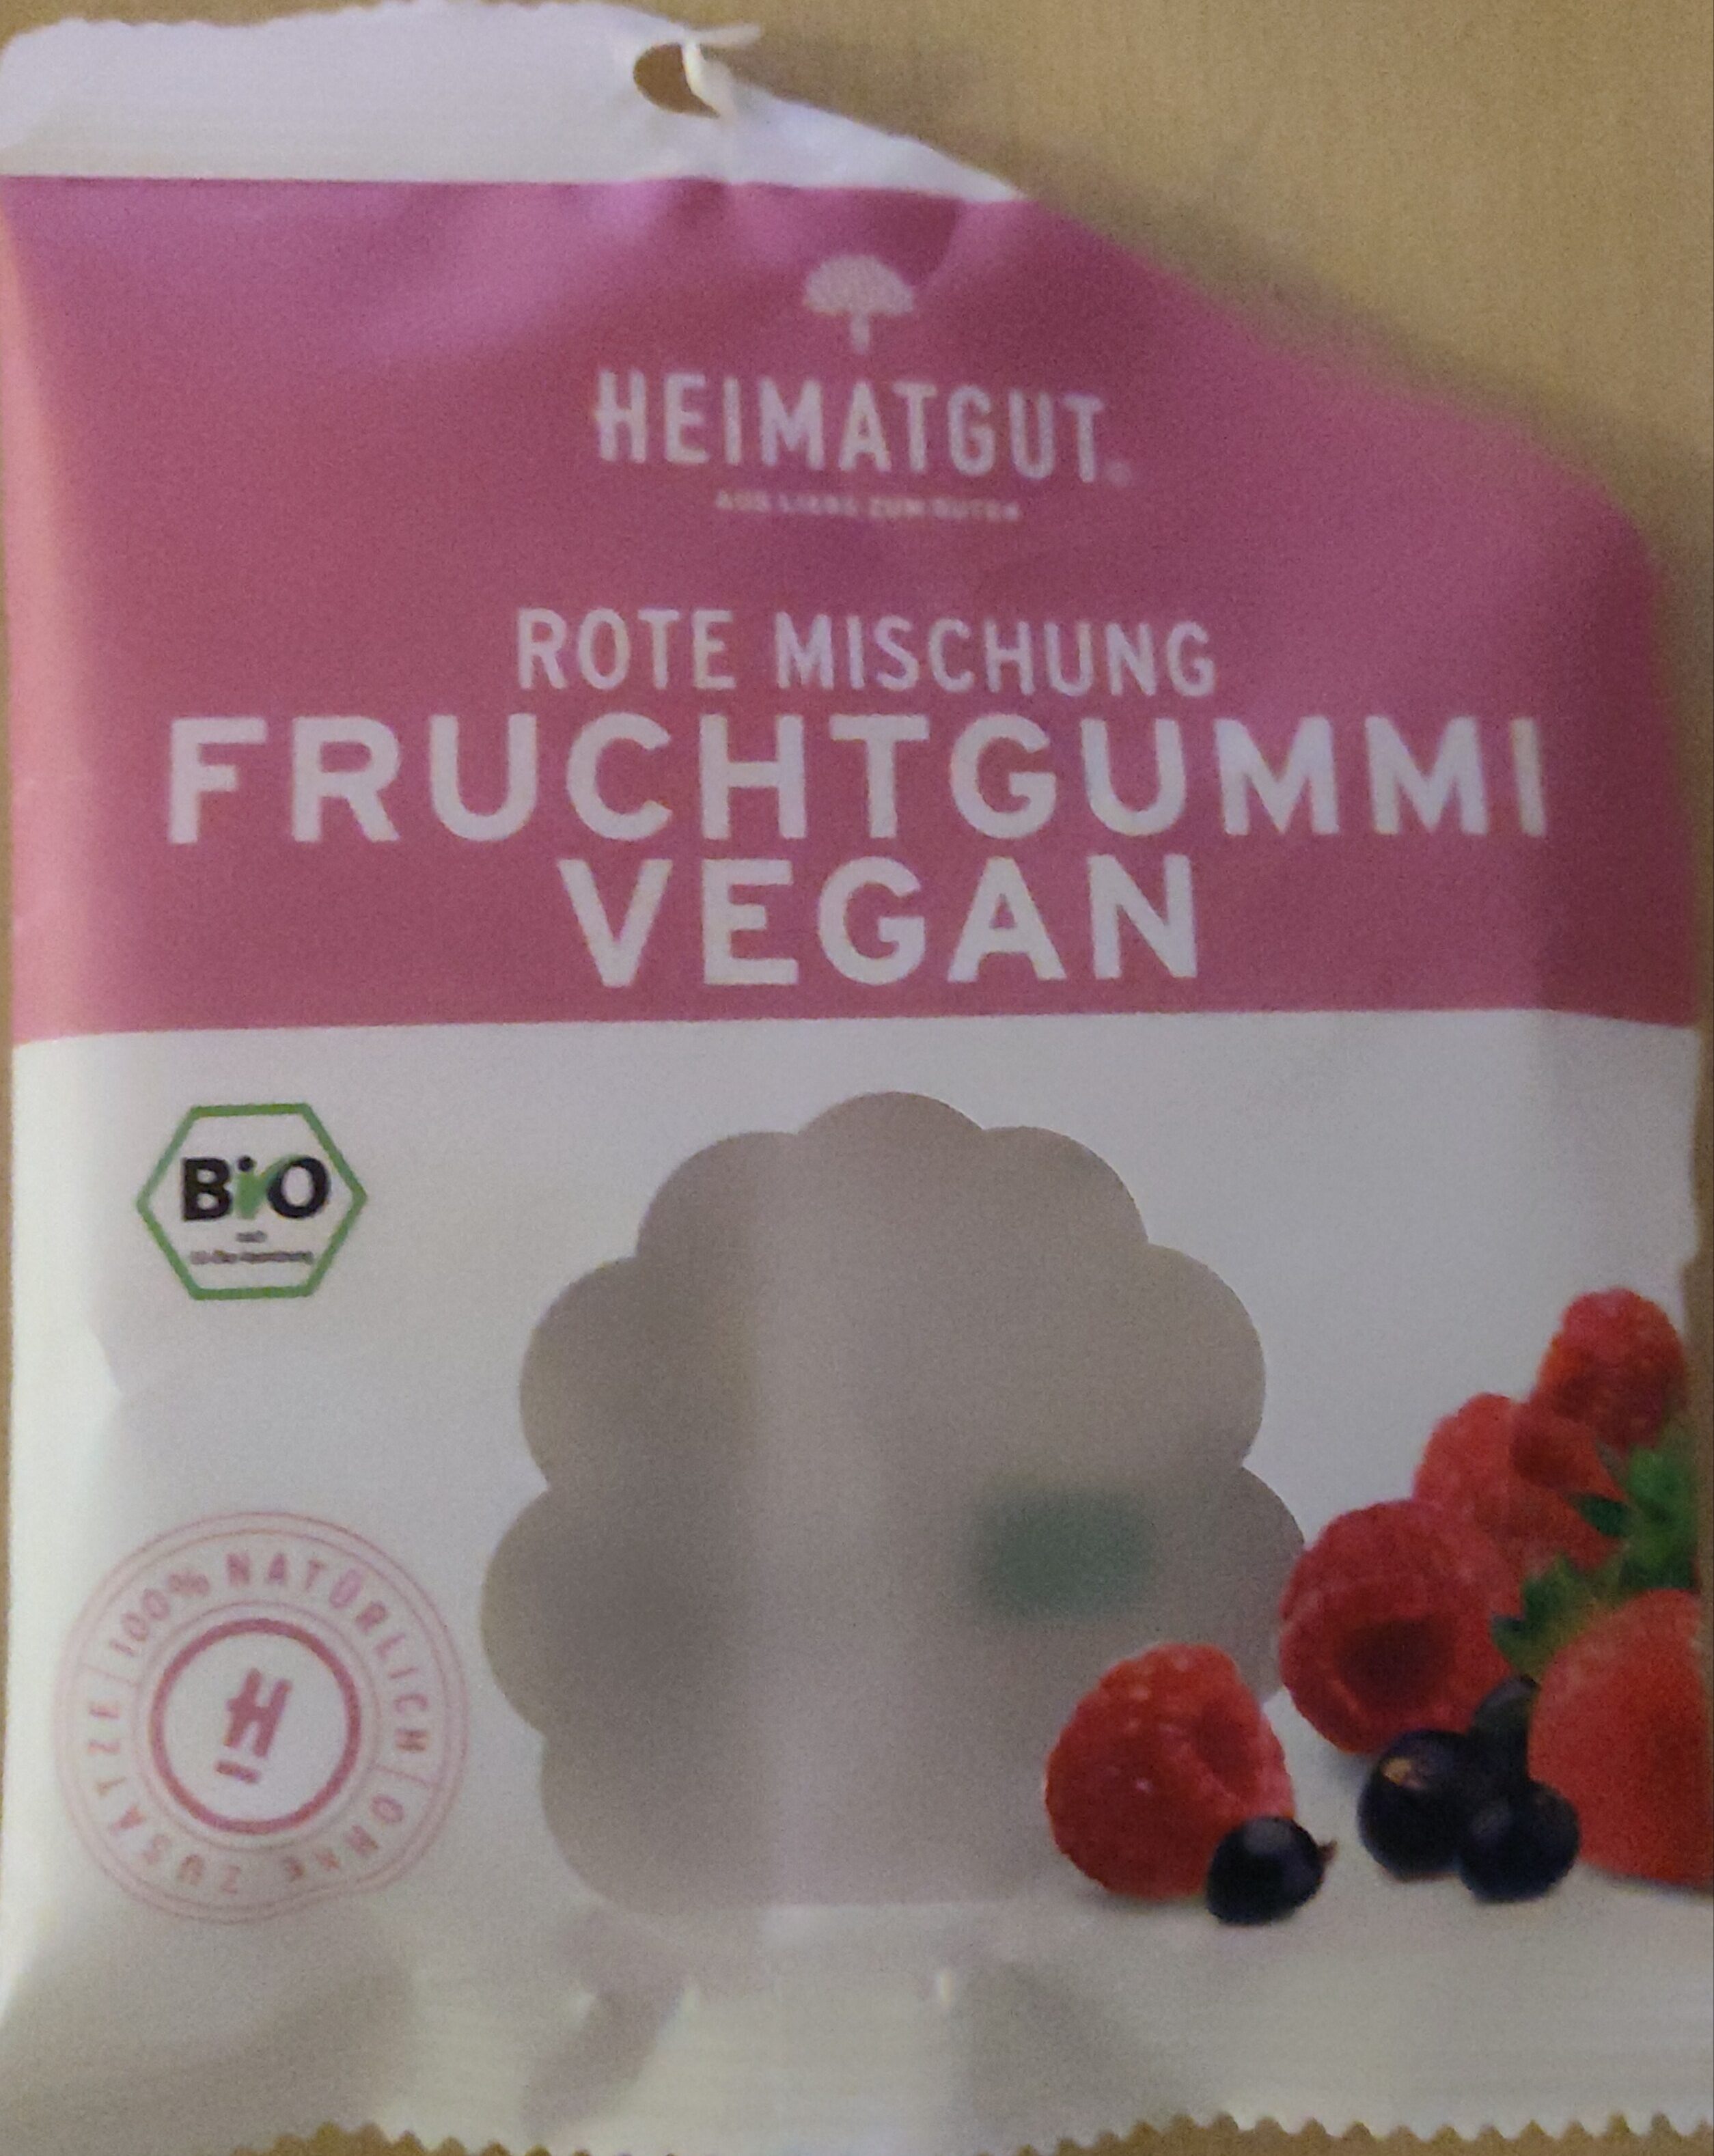 Rote Mischung - Fruchtgummi Vegan - Product - de